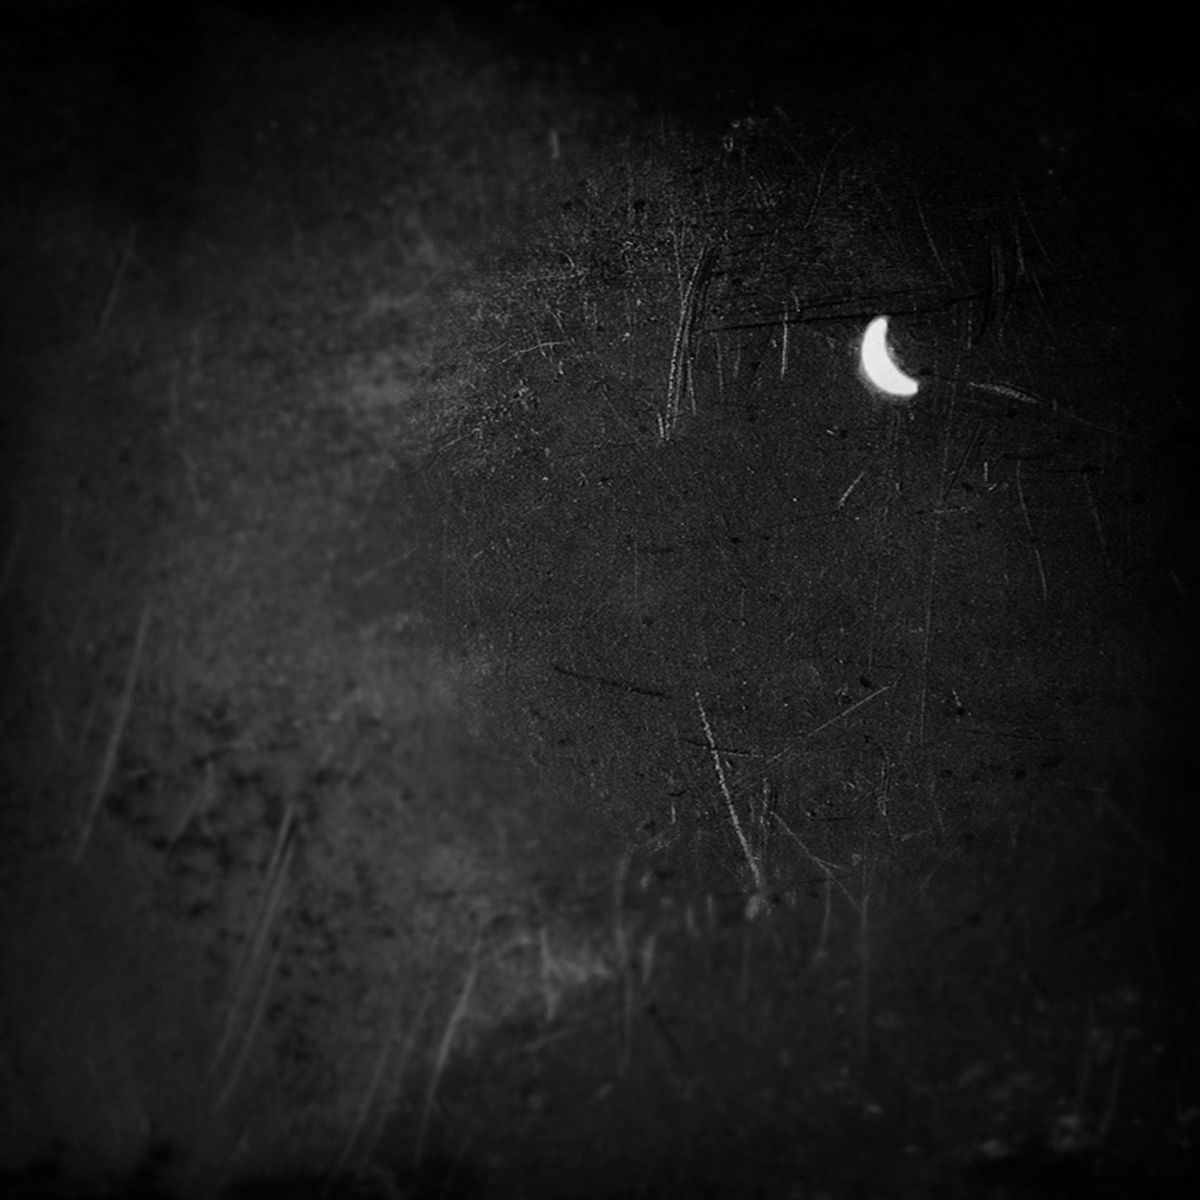 black and white black & white iphone iPhoneography hipstamatic photo Landscape bianco e nero lomo instagram